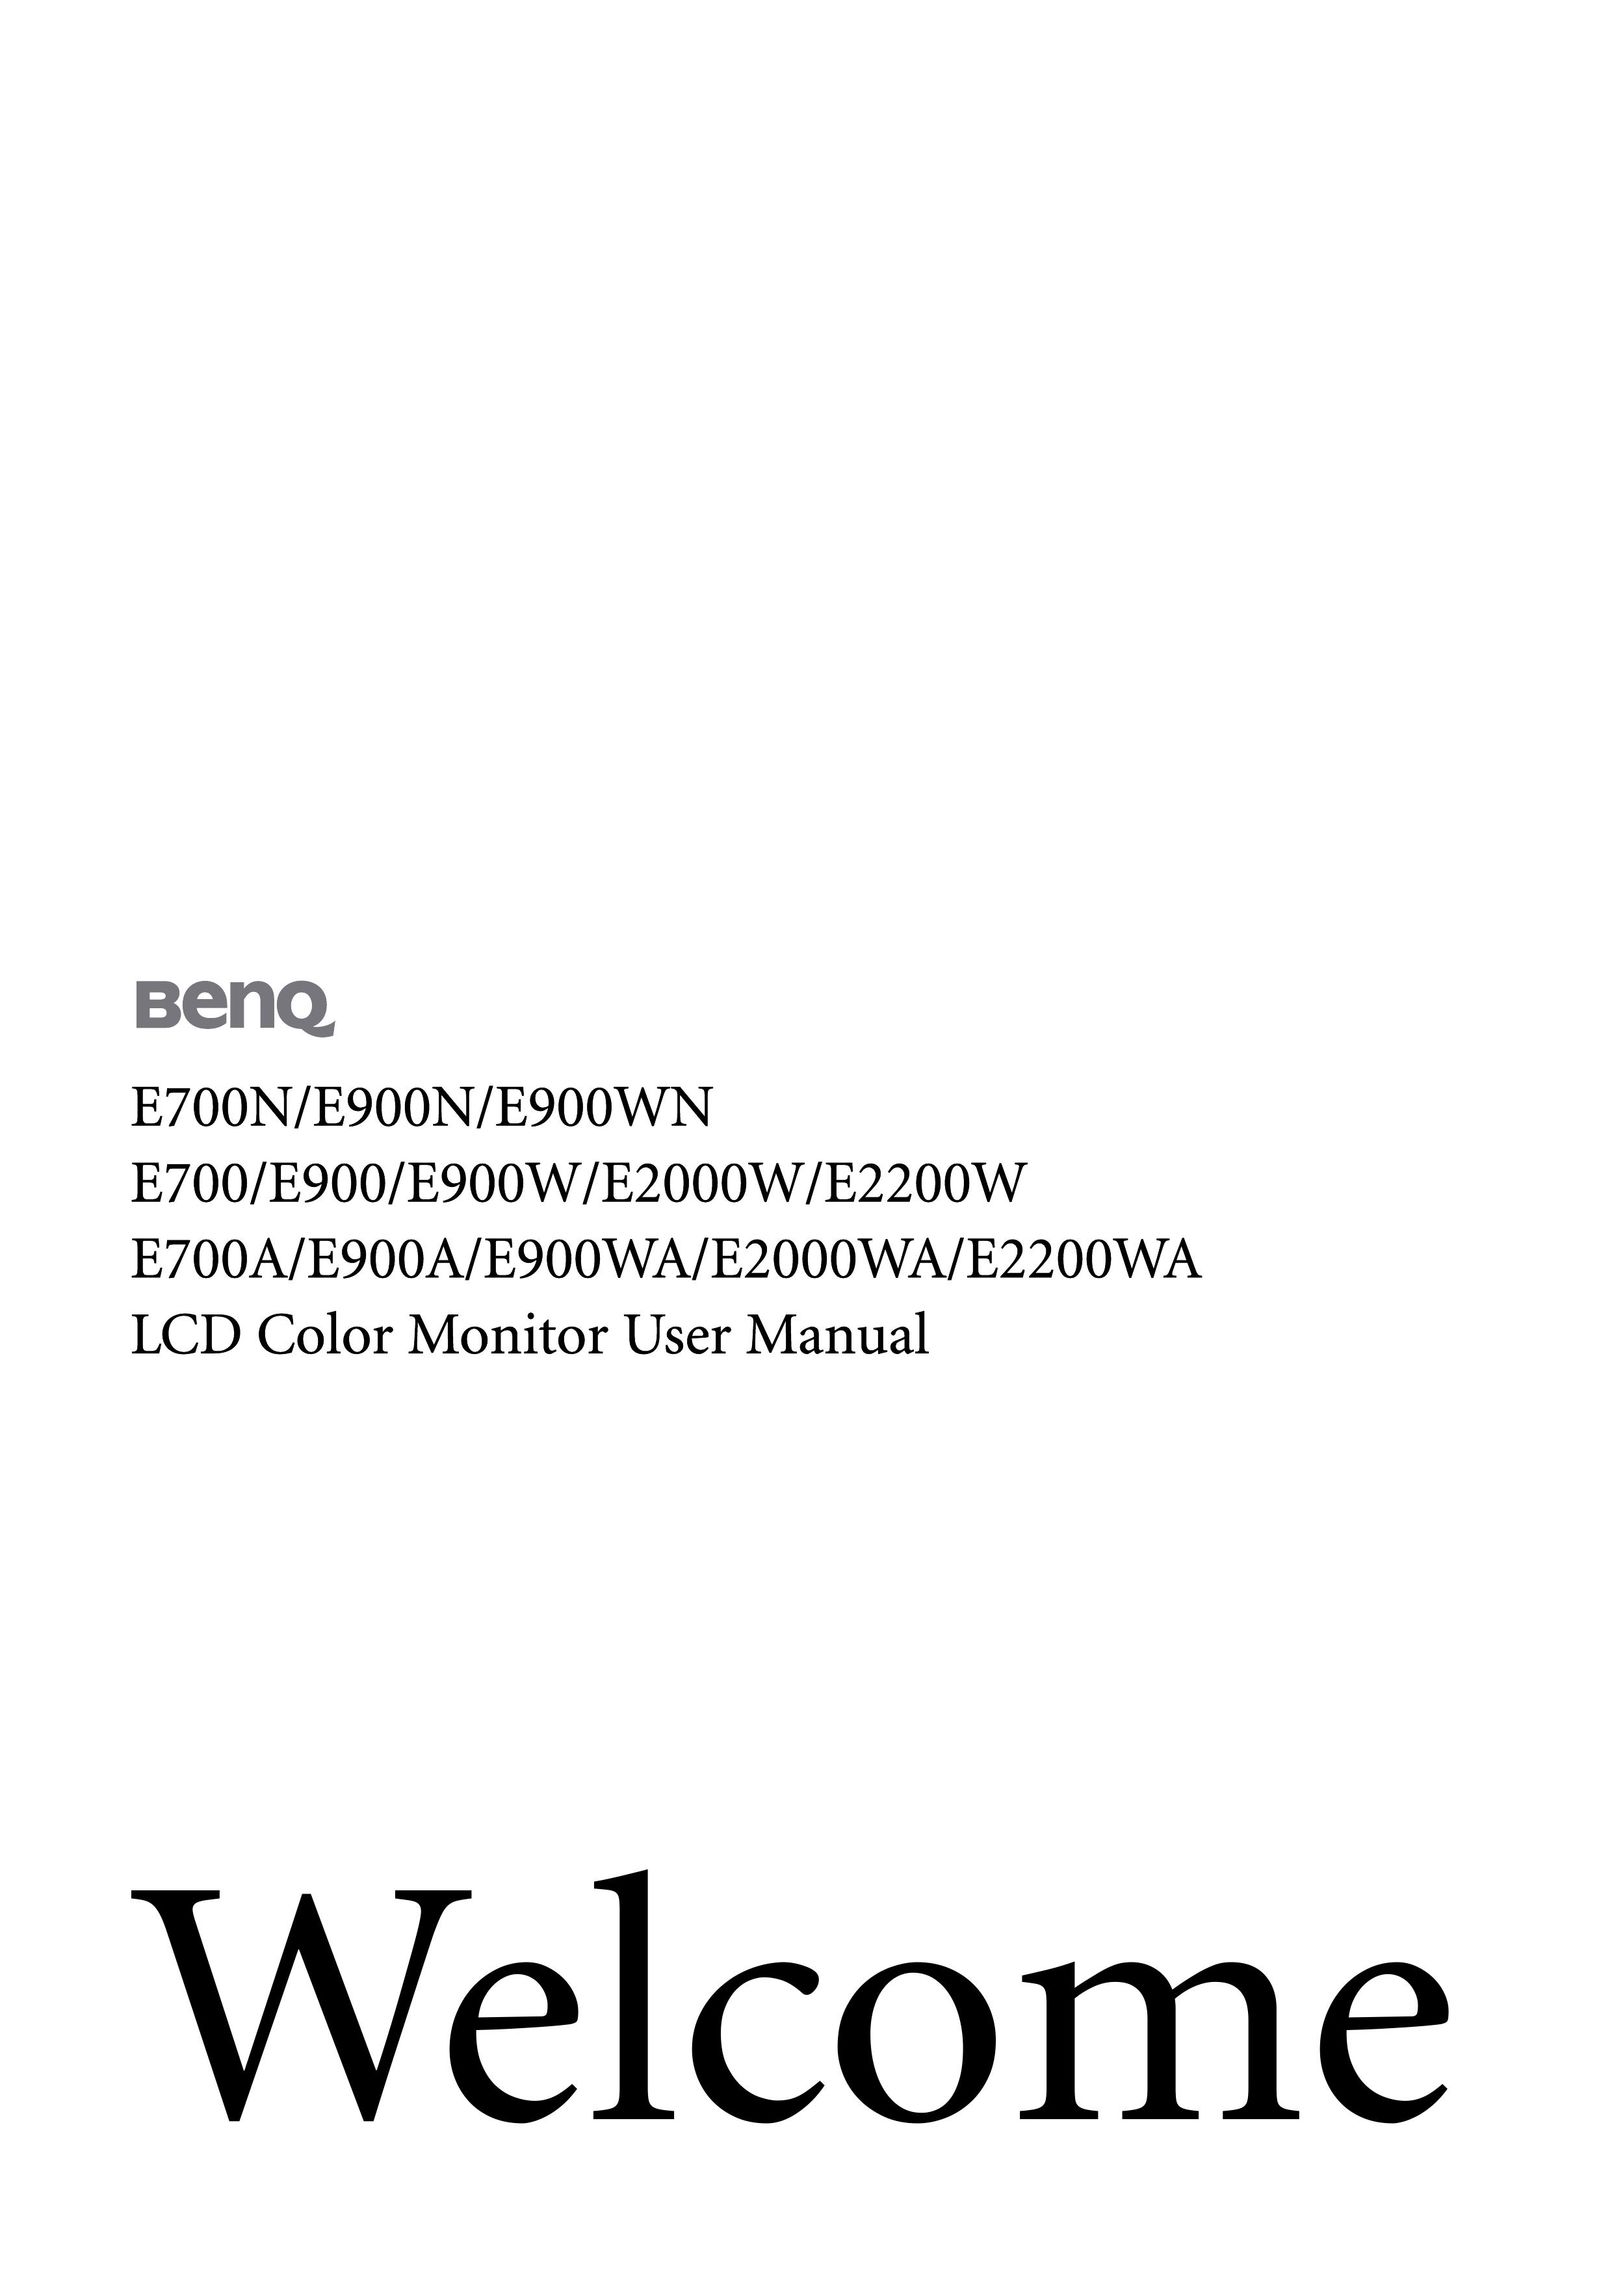 BenQ E900N Computer Monitor User Manual